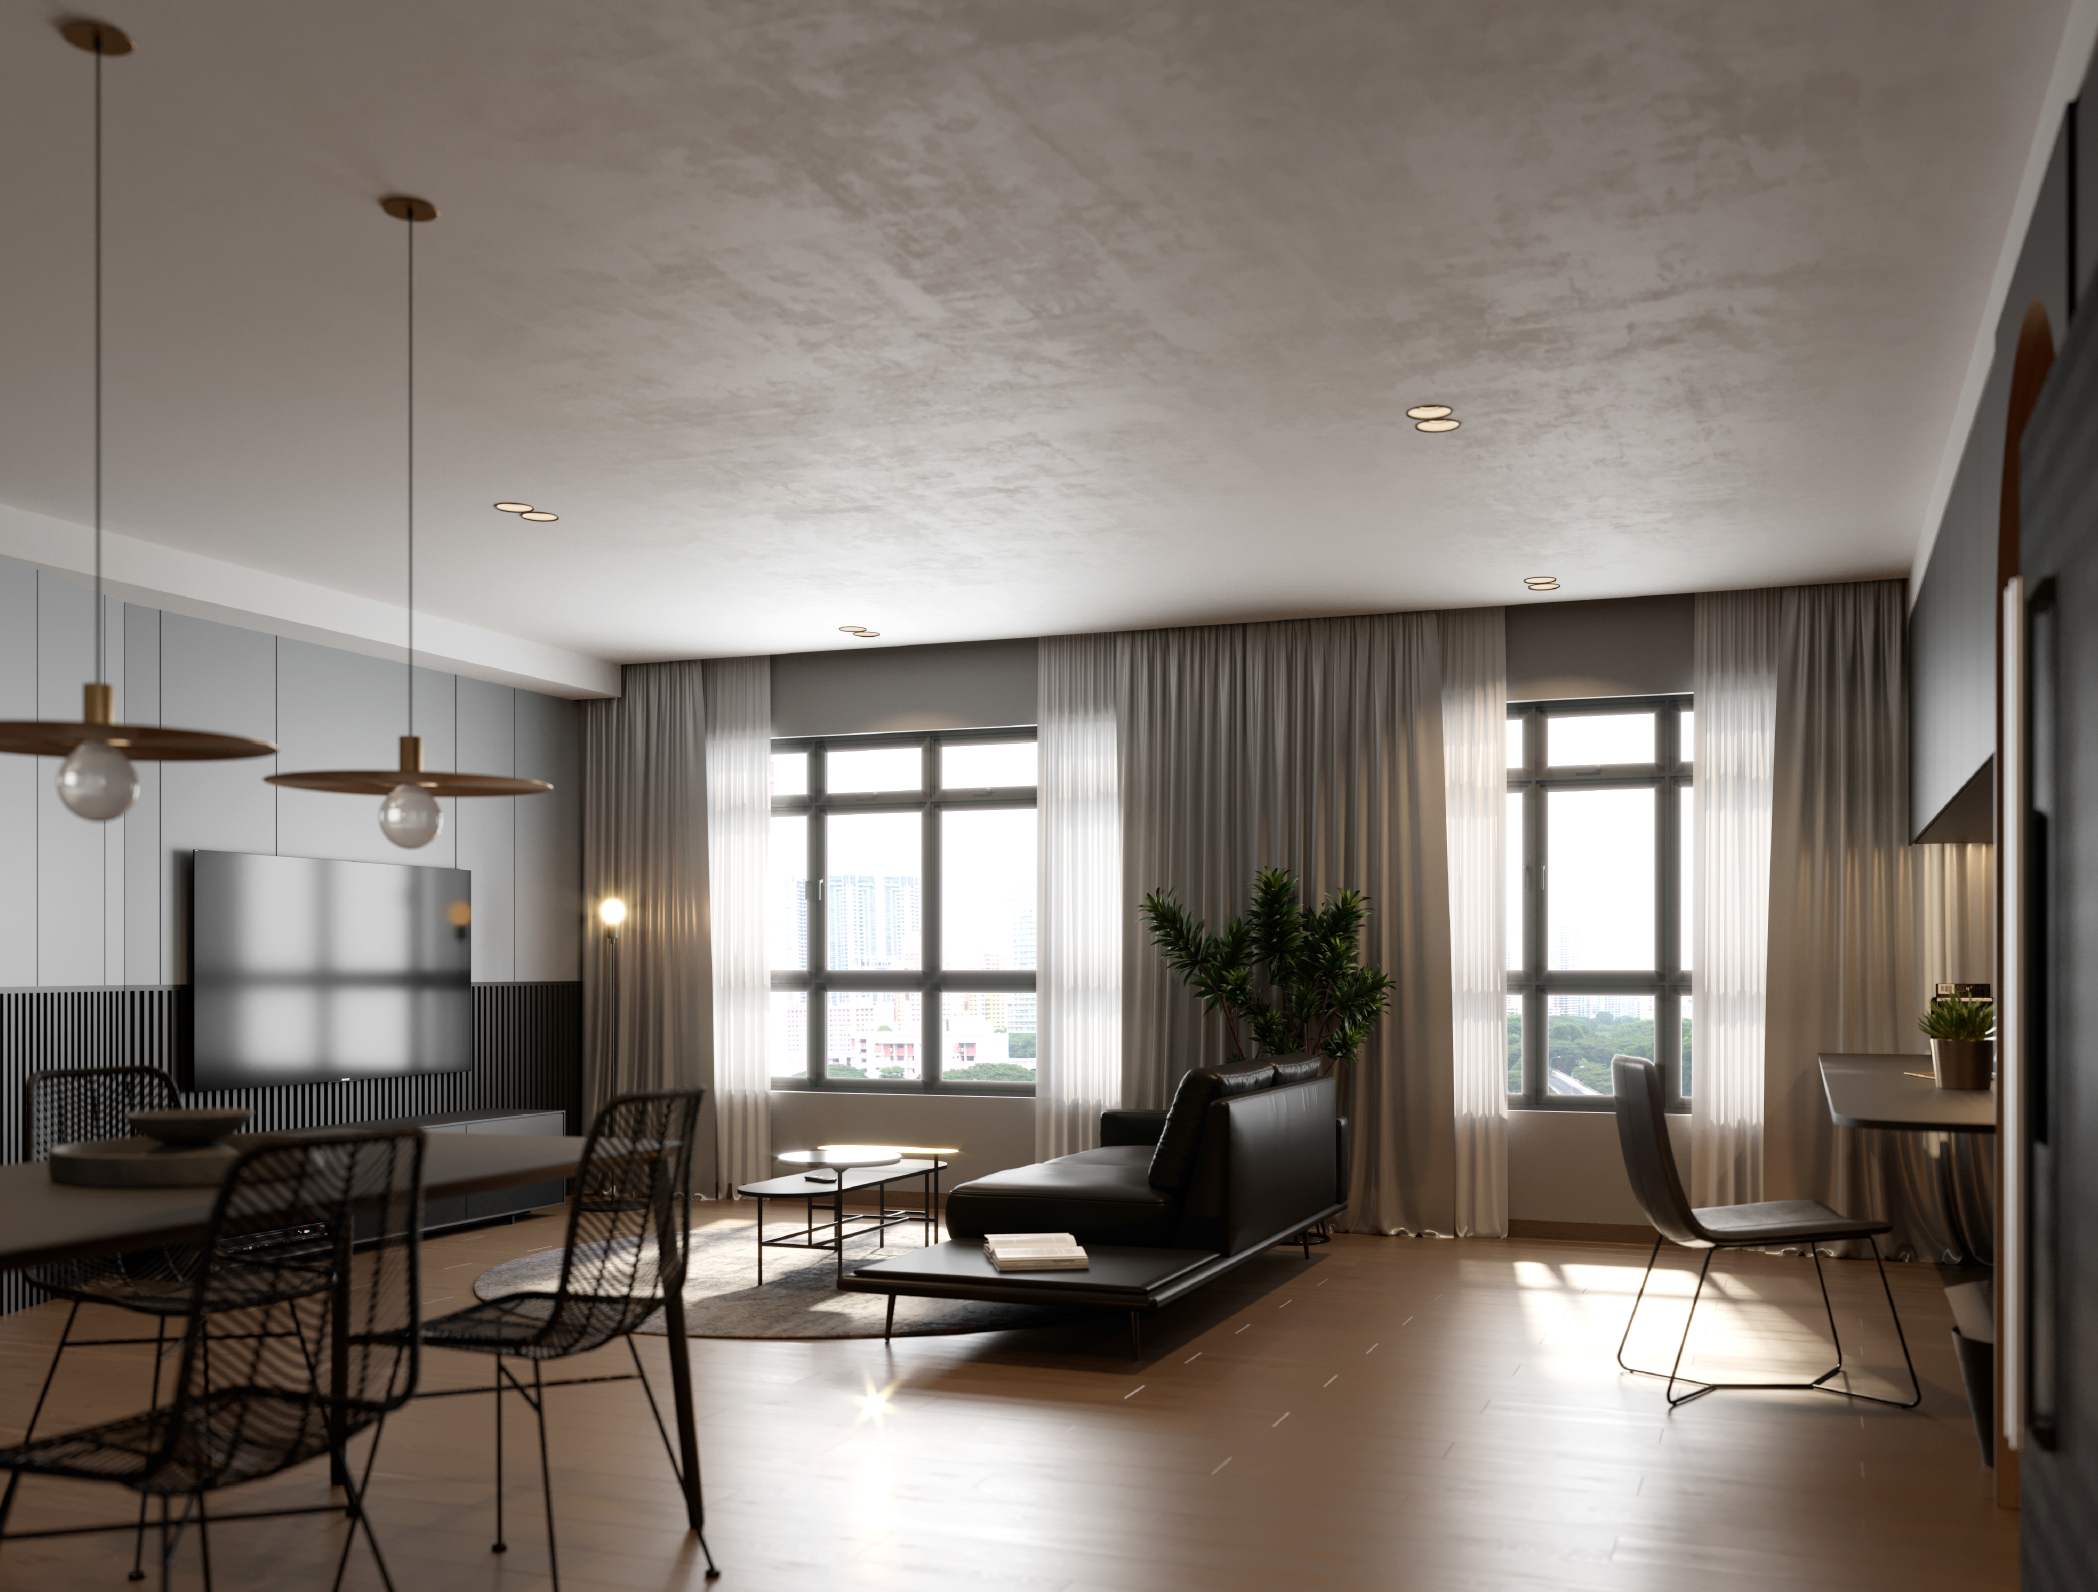 Introspective hue living room design by Arche Interior